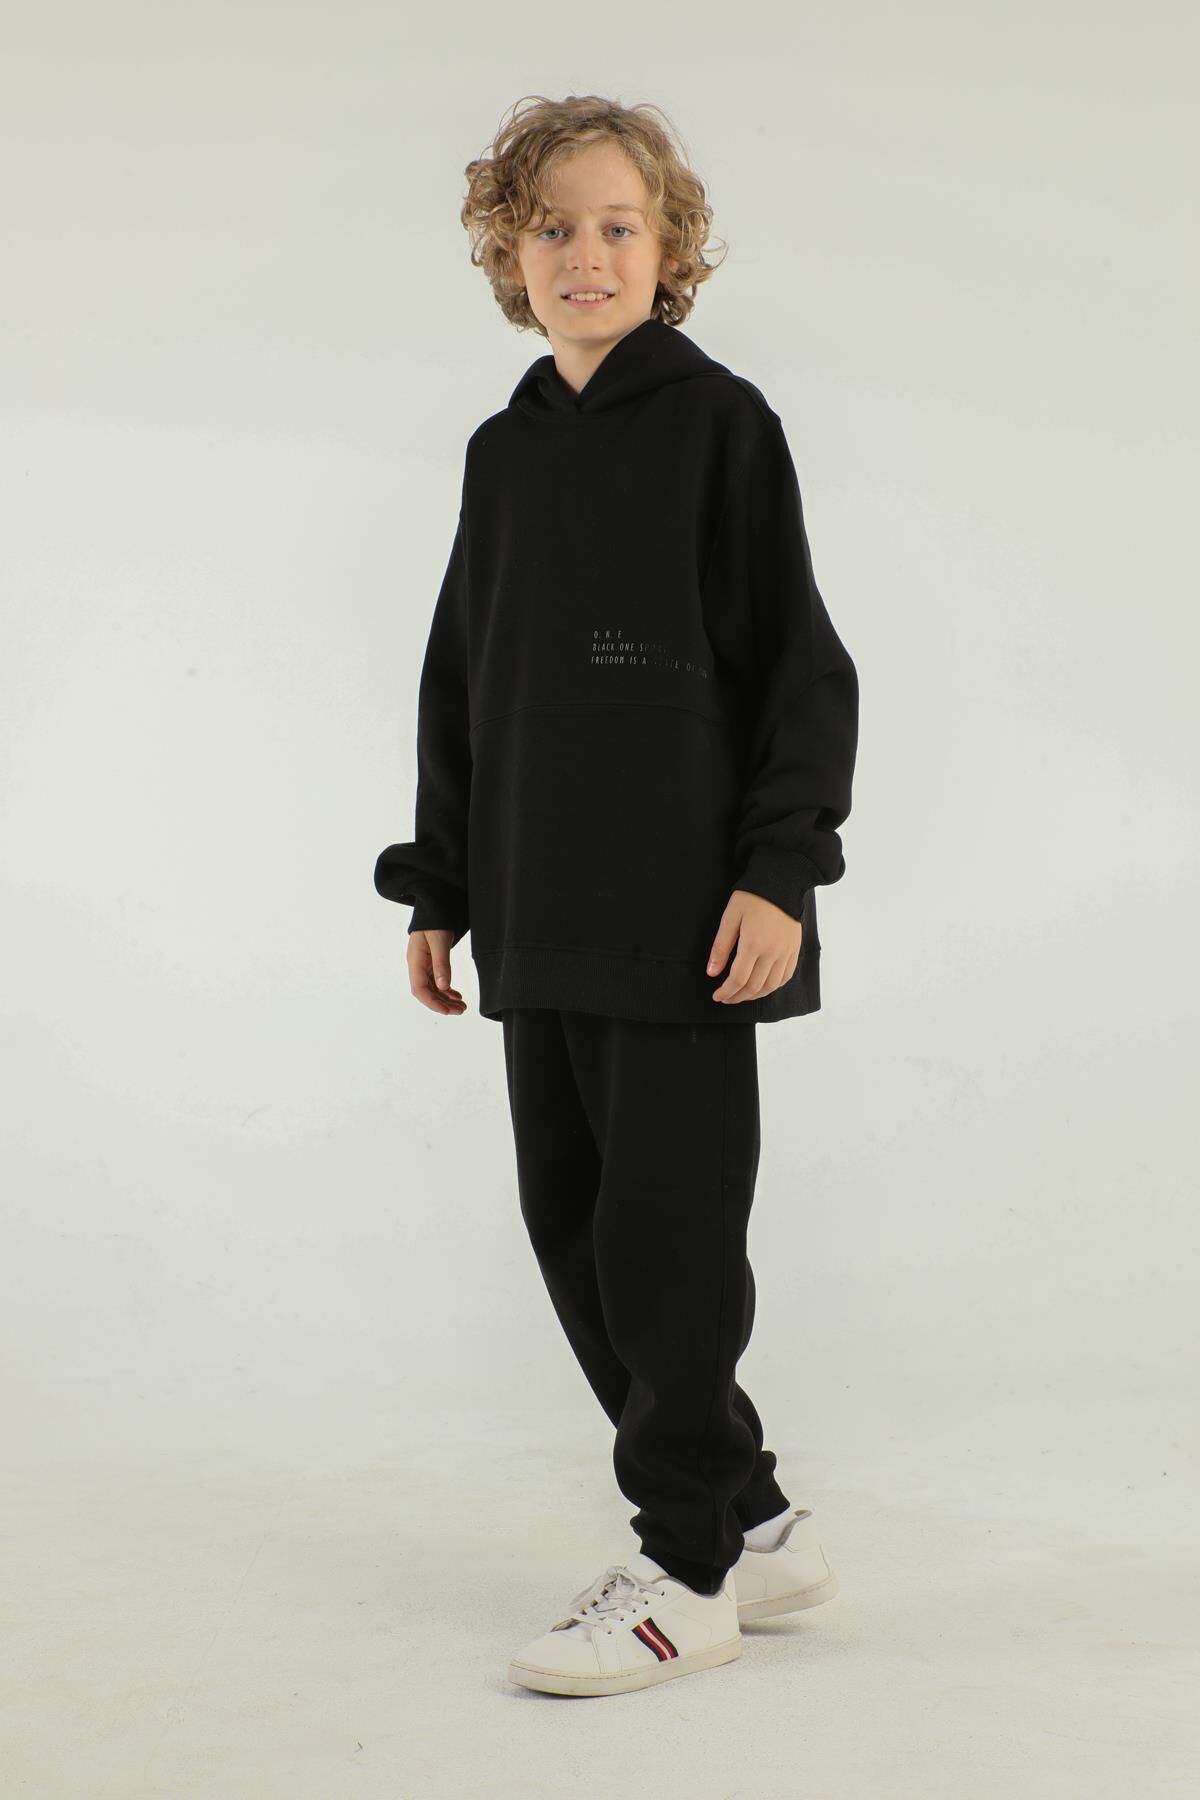 Çocuk Giyim I Eşofman, Tayt, Sweatshirt Modelleri I BLACK ONE